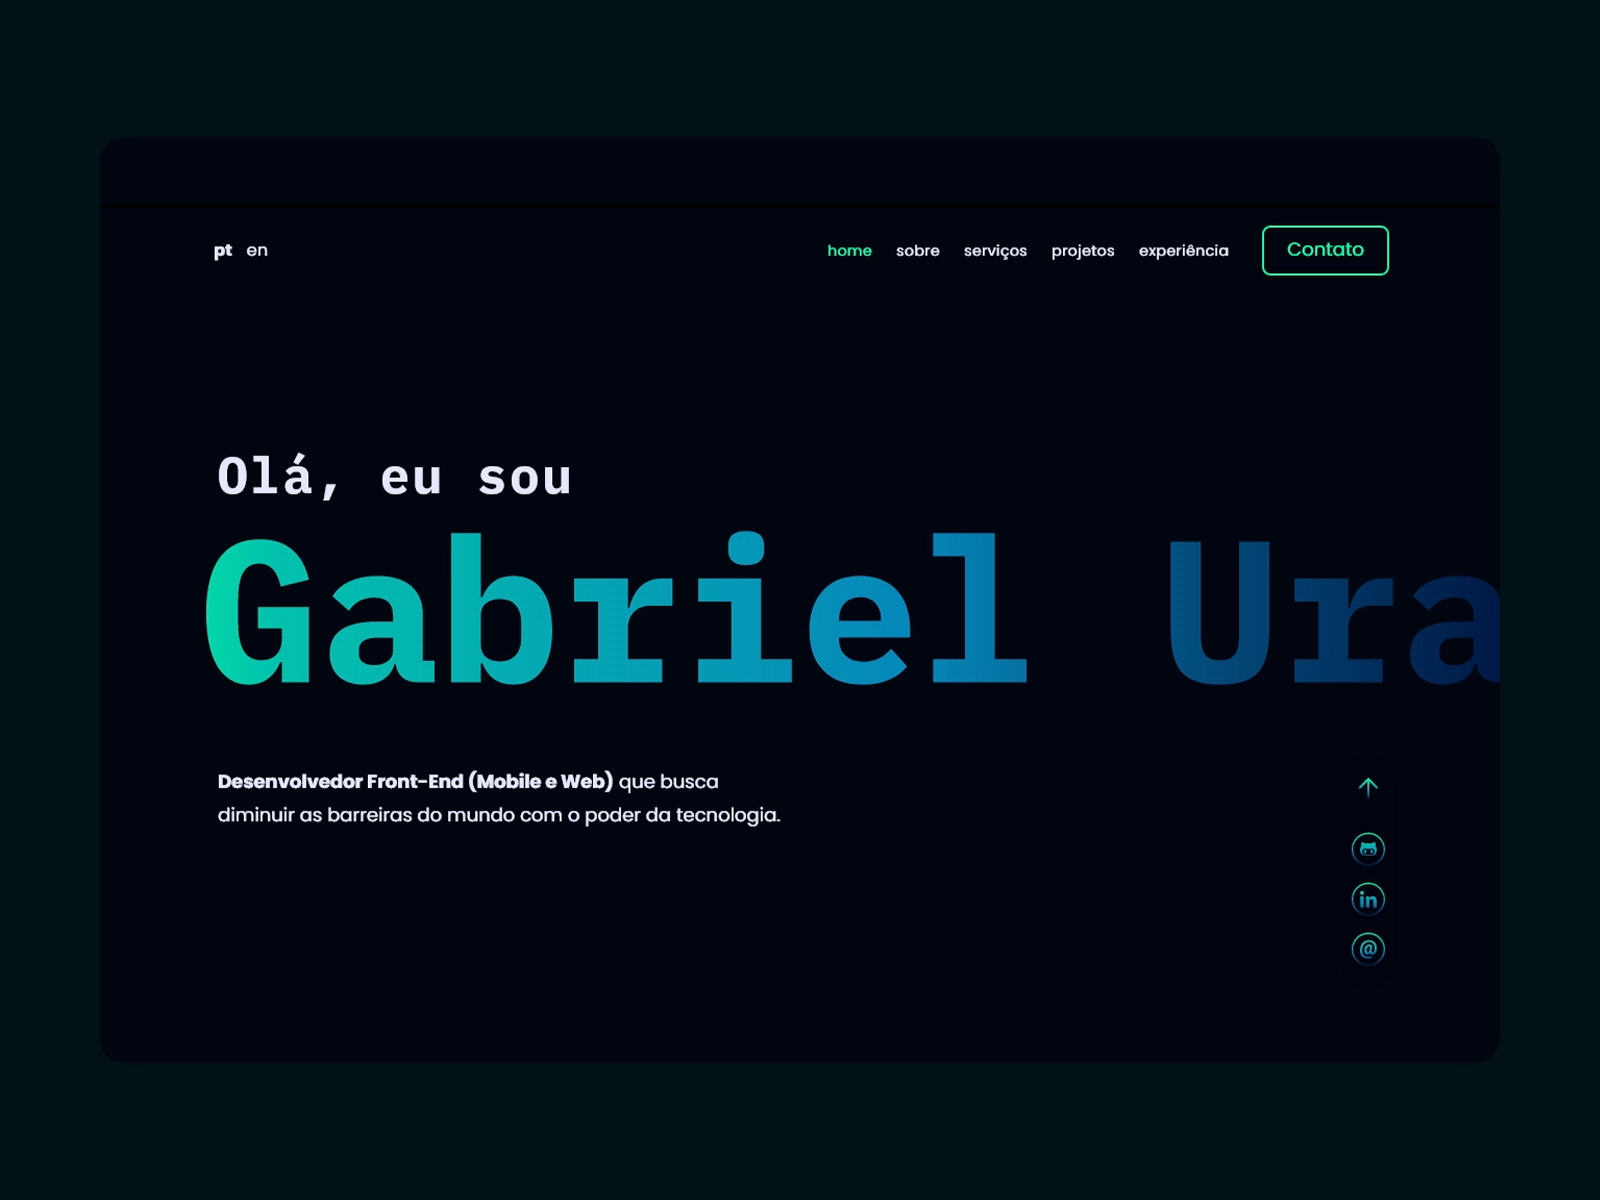 Personal Portfolio Website - Gabriel Urano